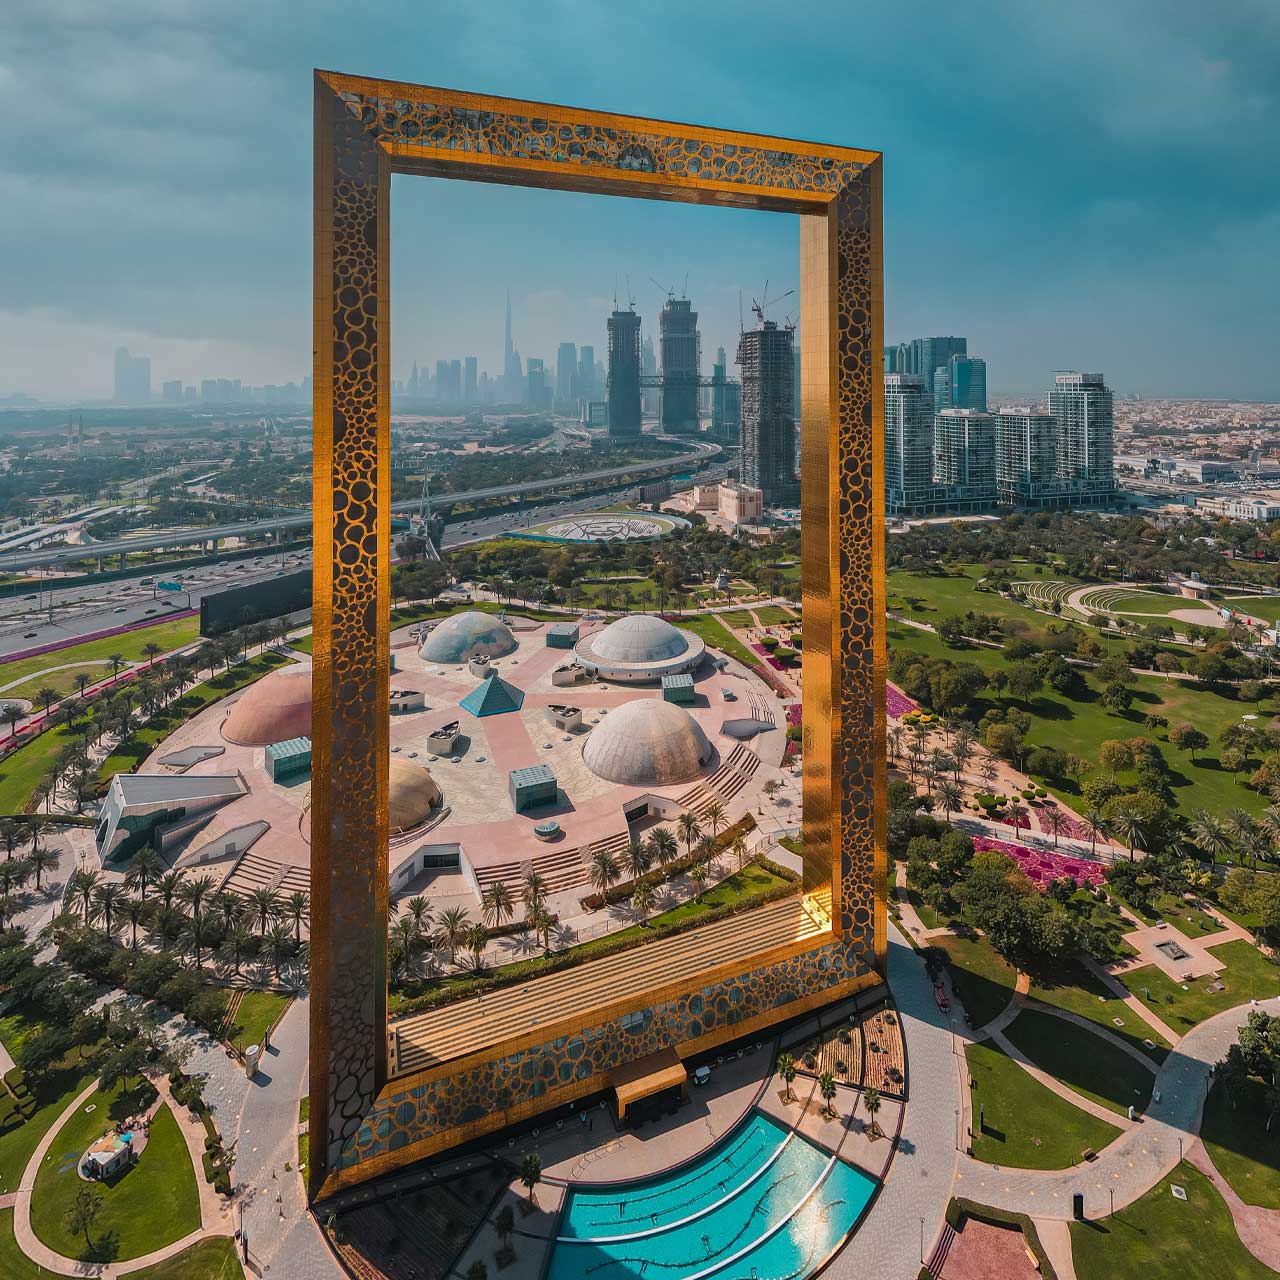 The Dubai Frame - observation platform with 360° view